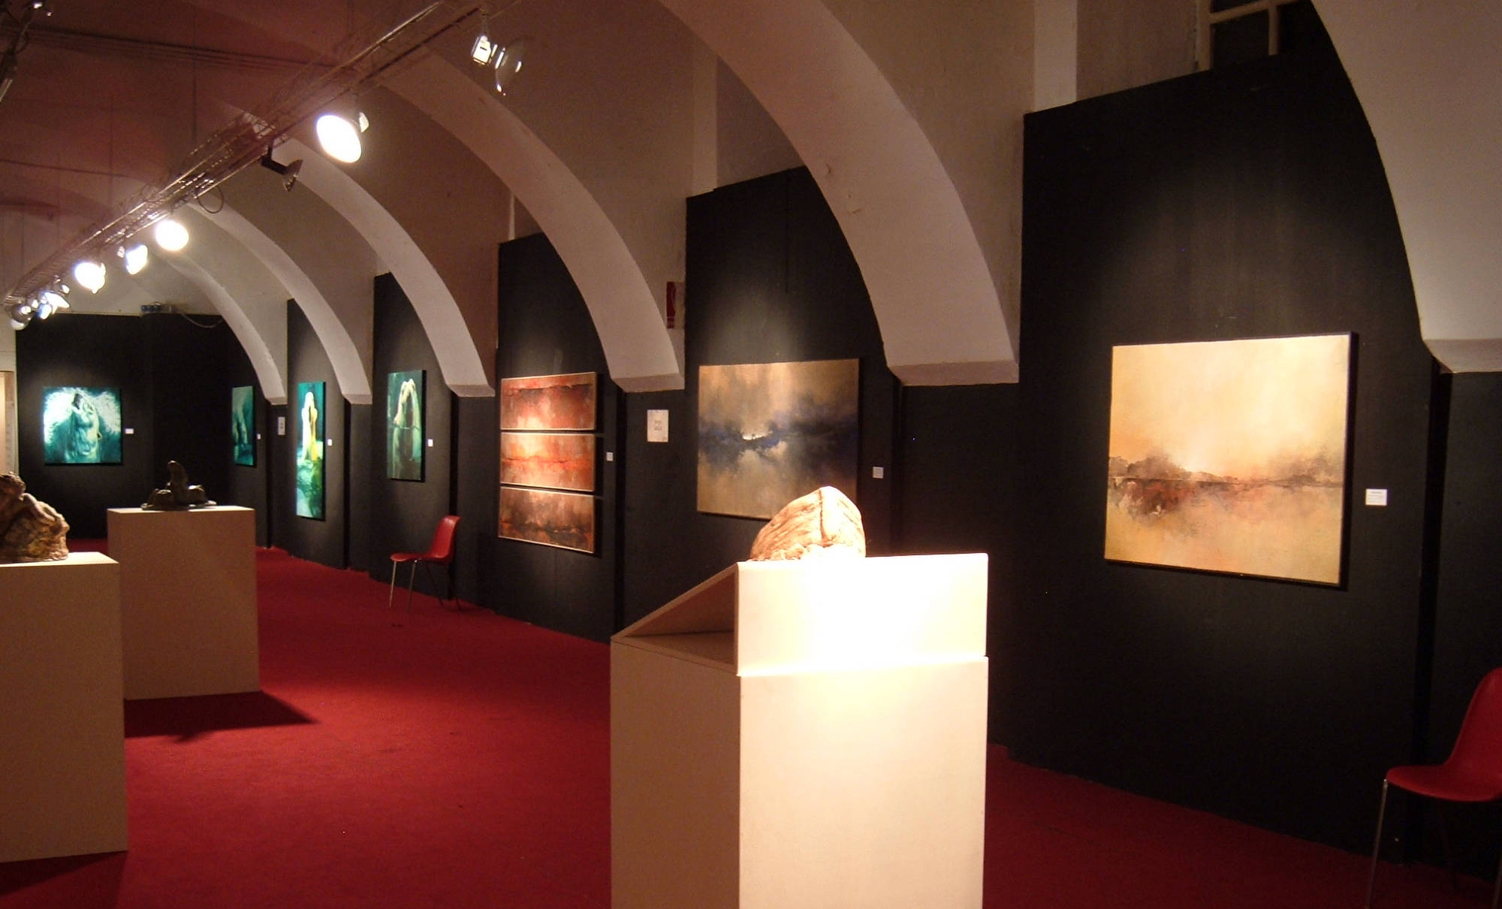 interno - intorno, The exhibits of Sergio Aiello contemporary visual artist of Abstract Contemporary Landscape Paintings at https://www.sergioaiello.com